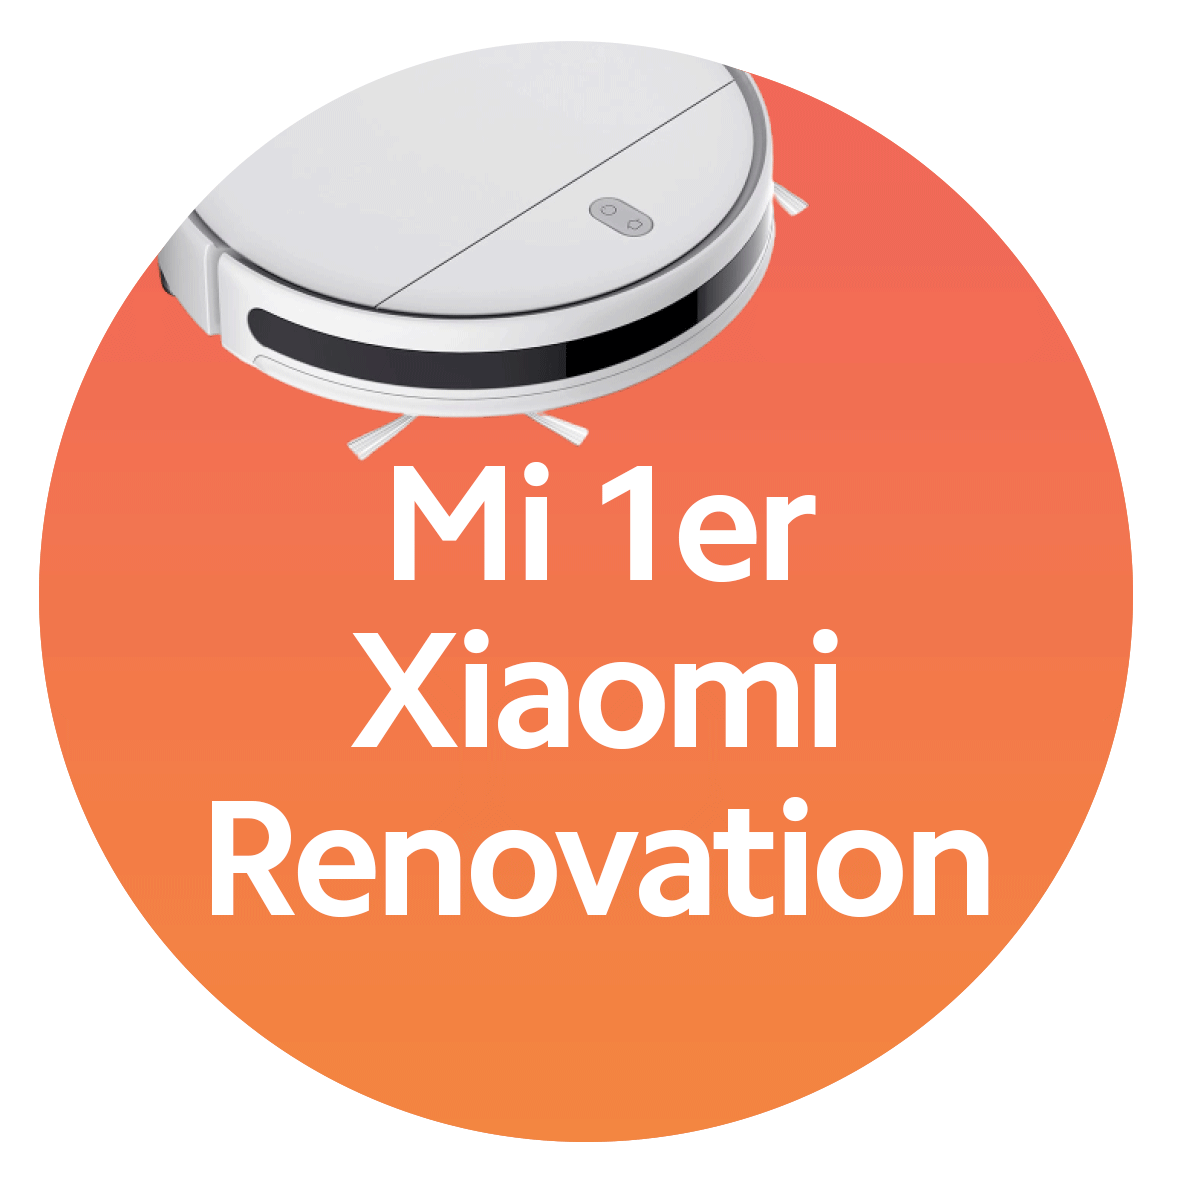 1er Xiaomi Renovation